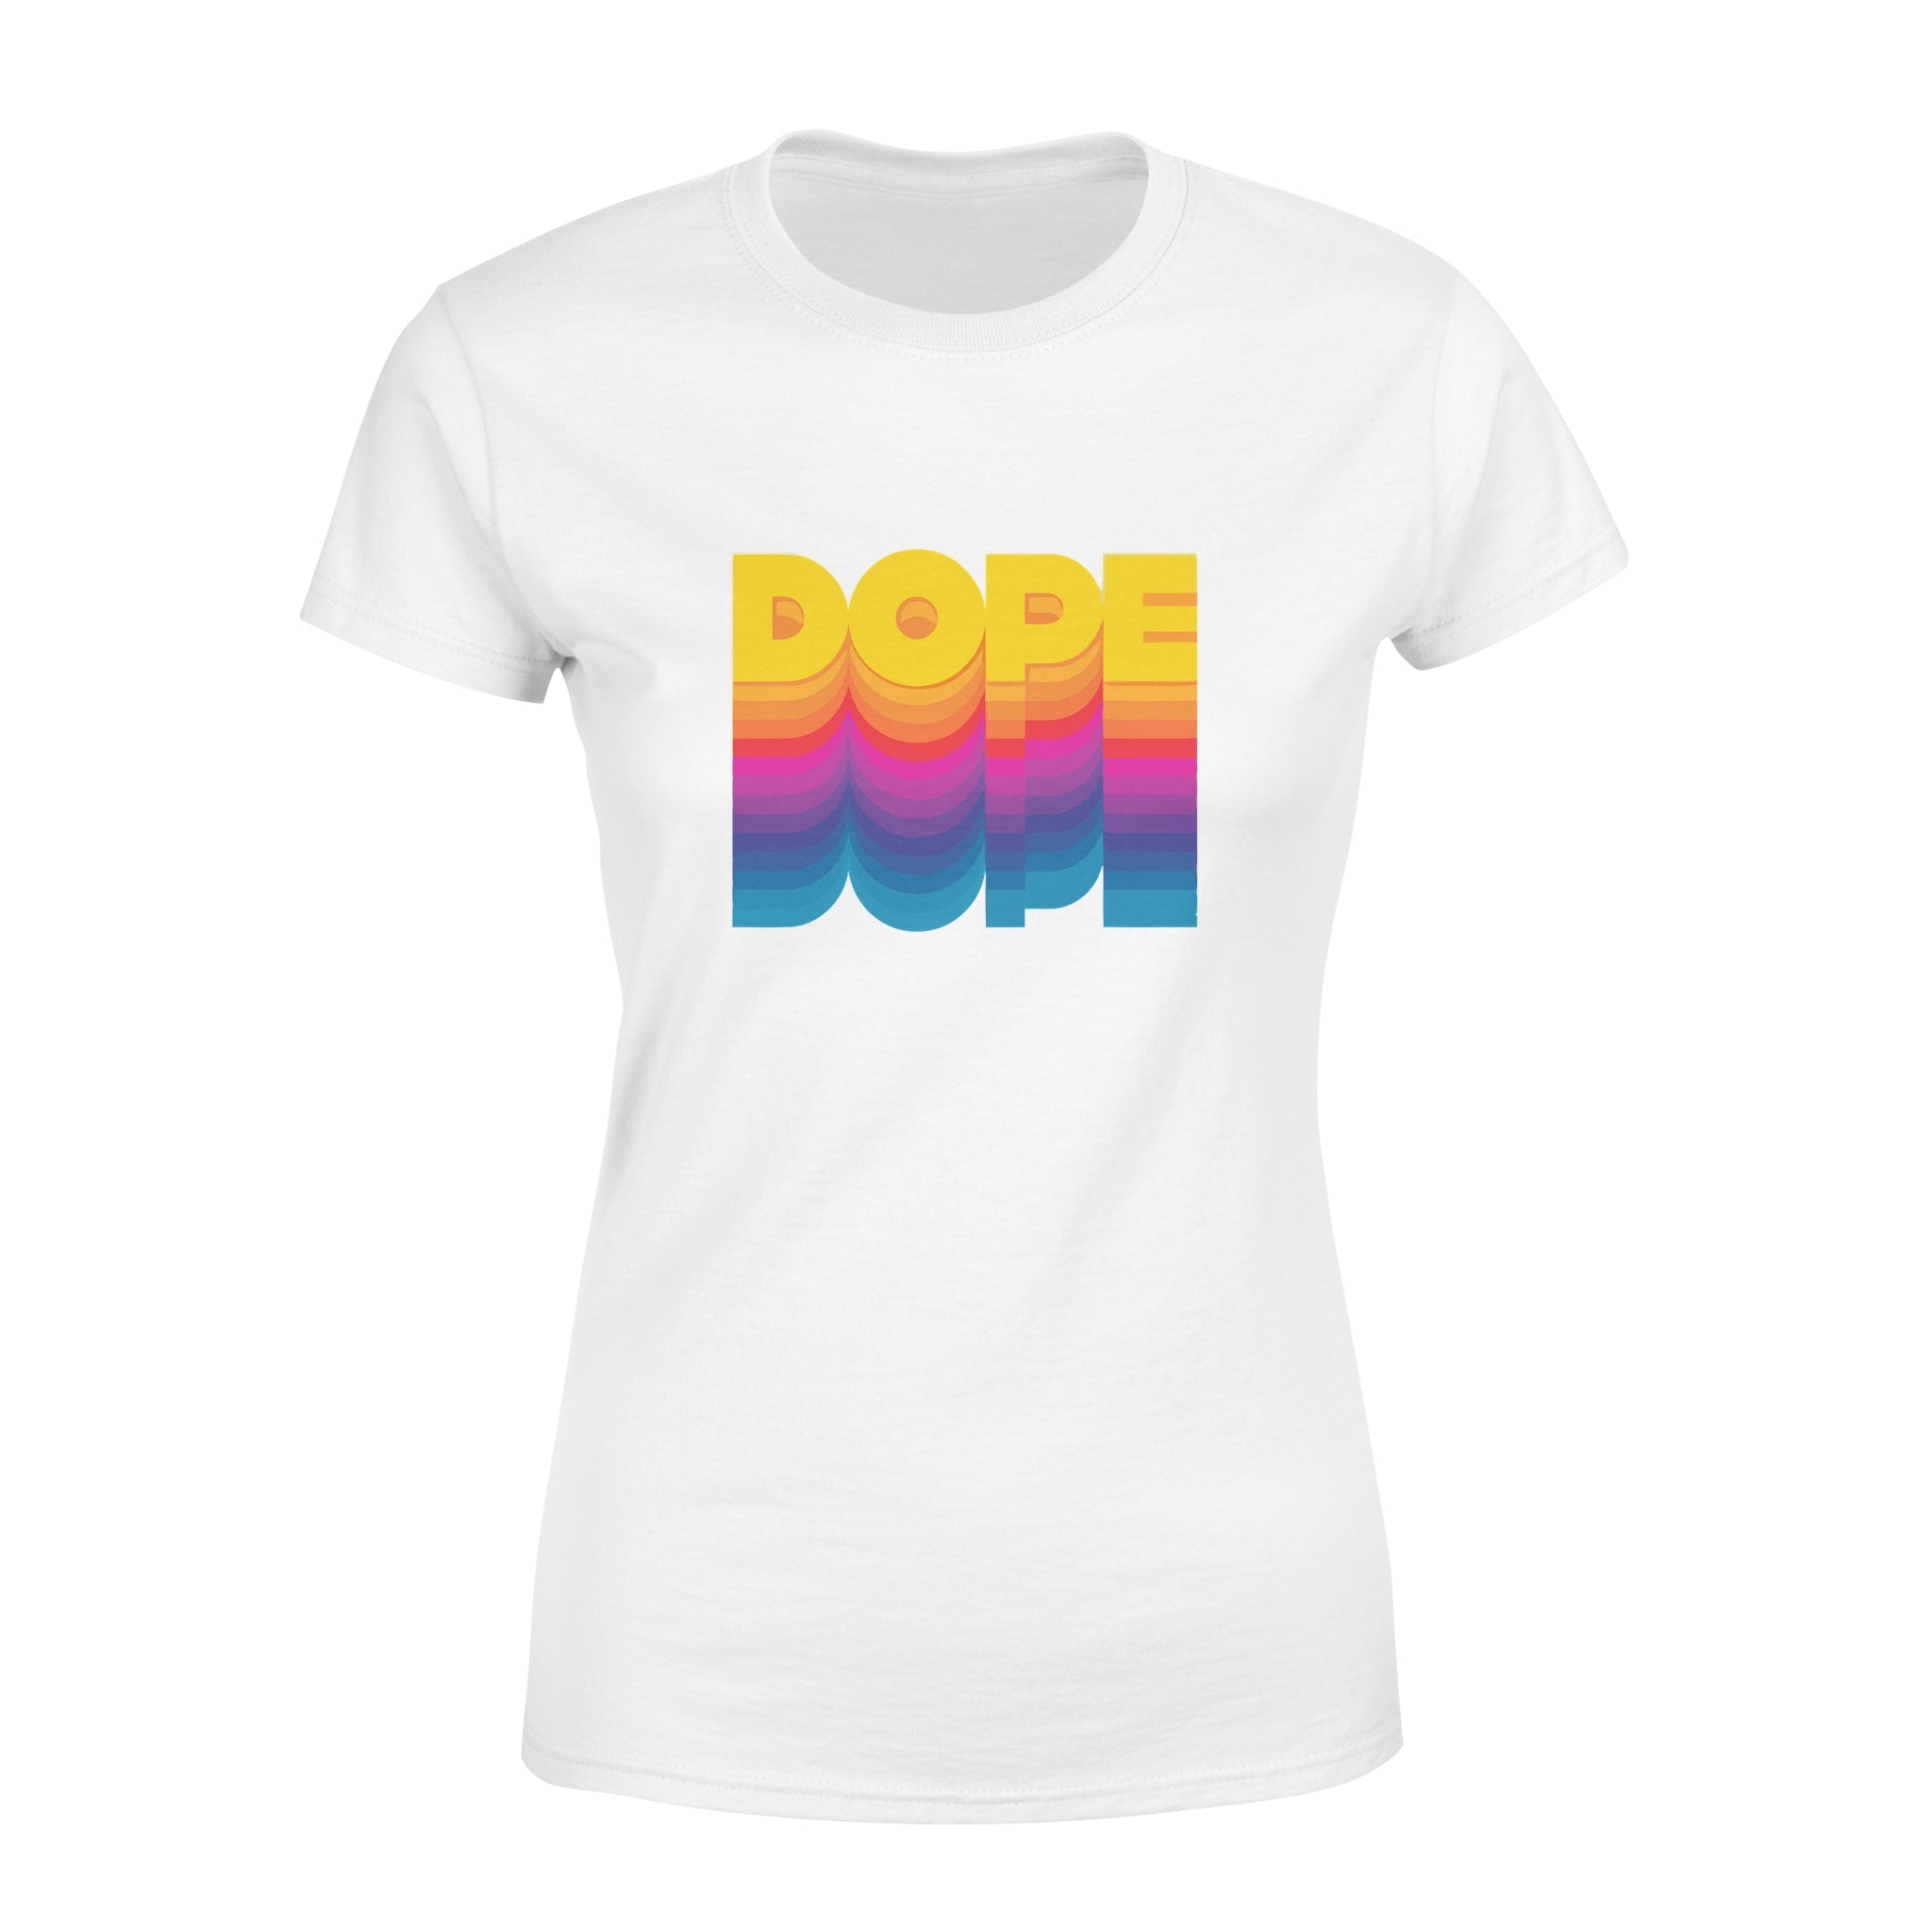 DOPE - Women's T-shirt